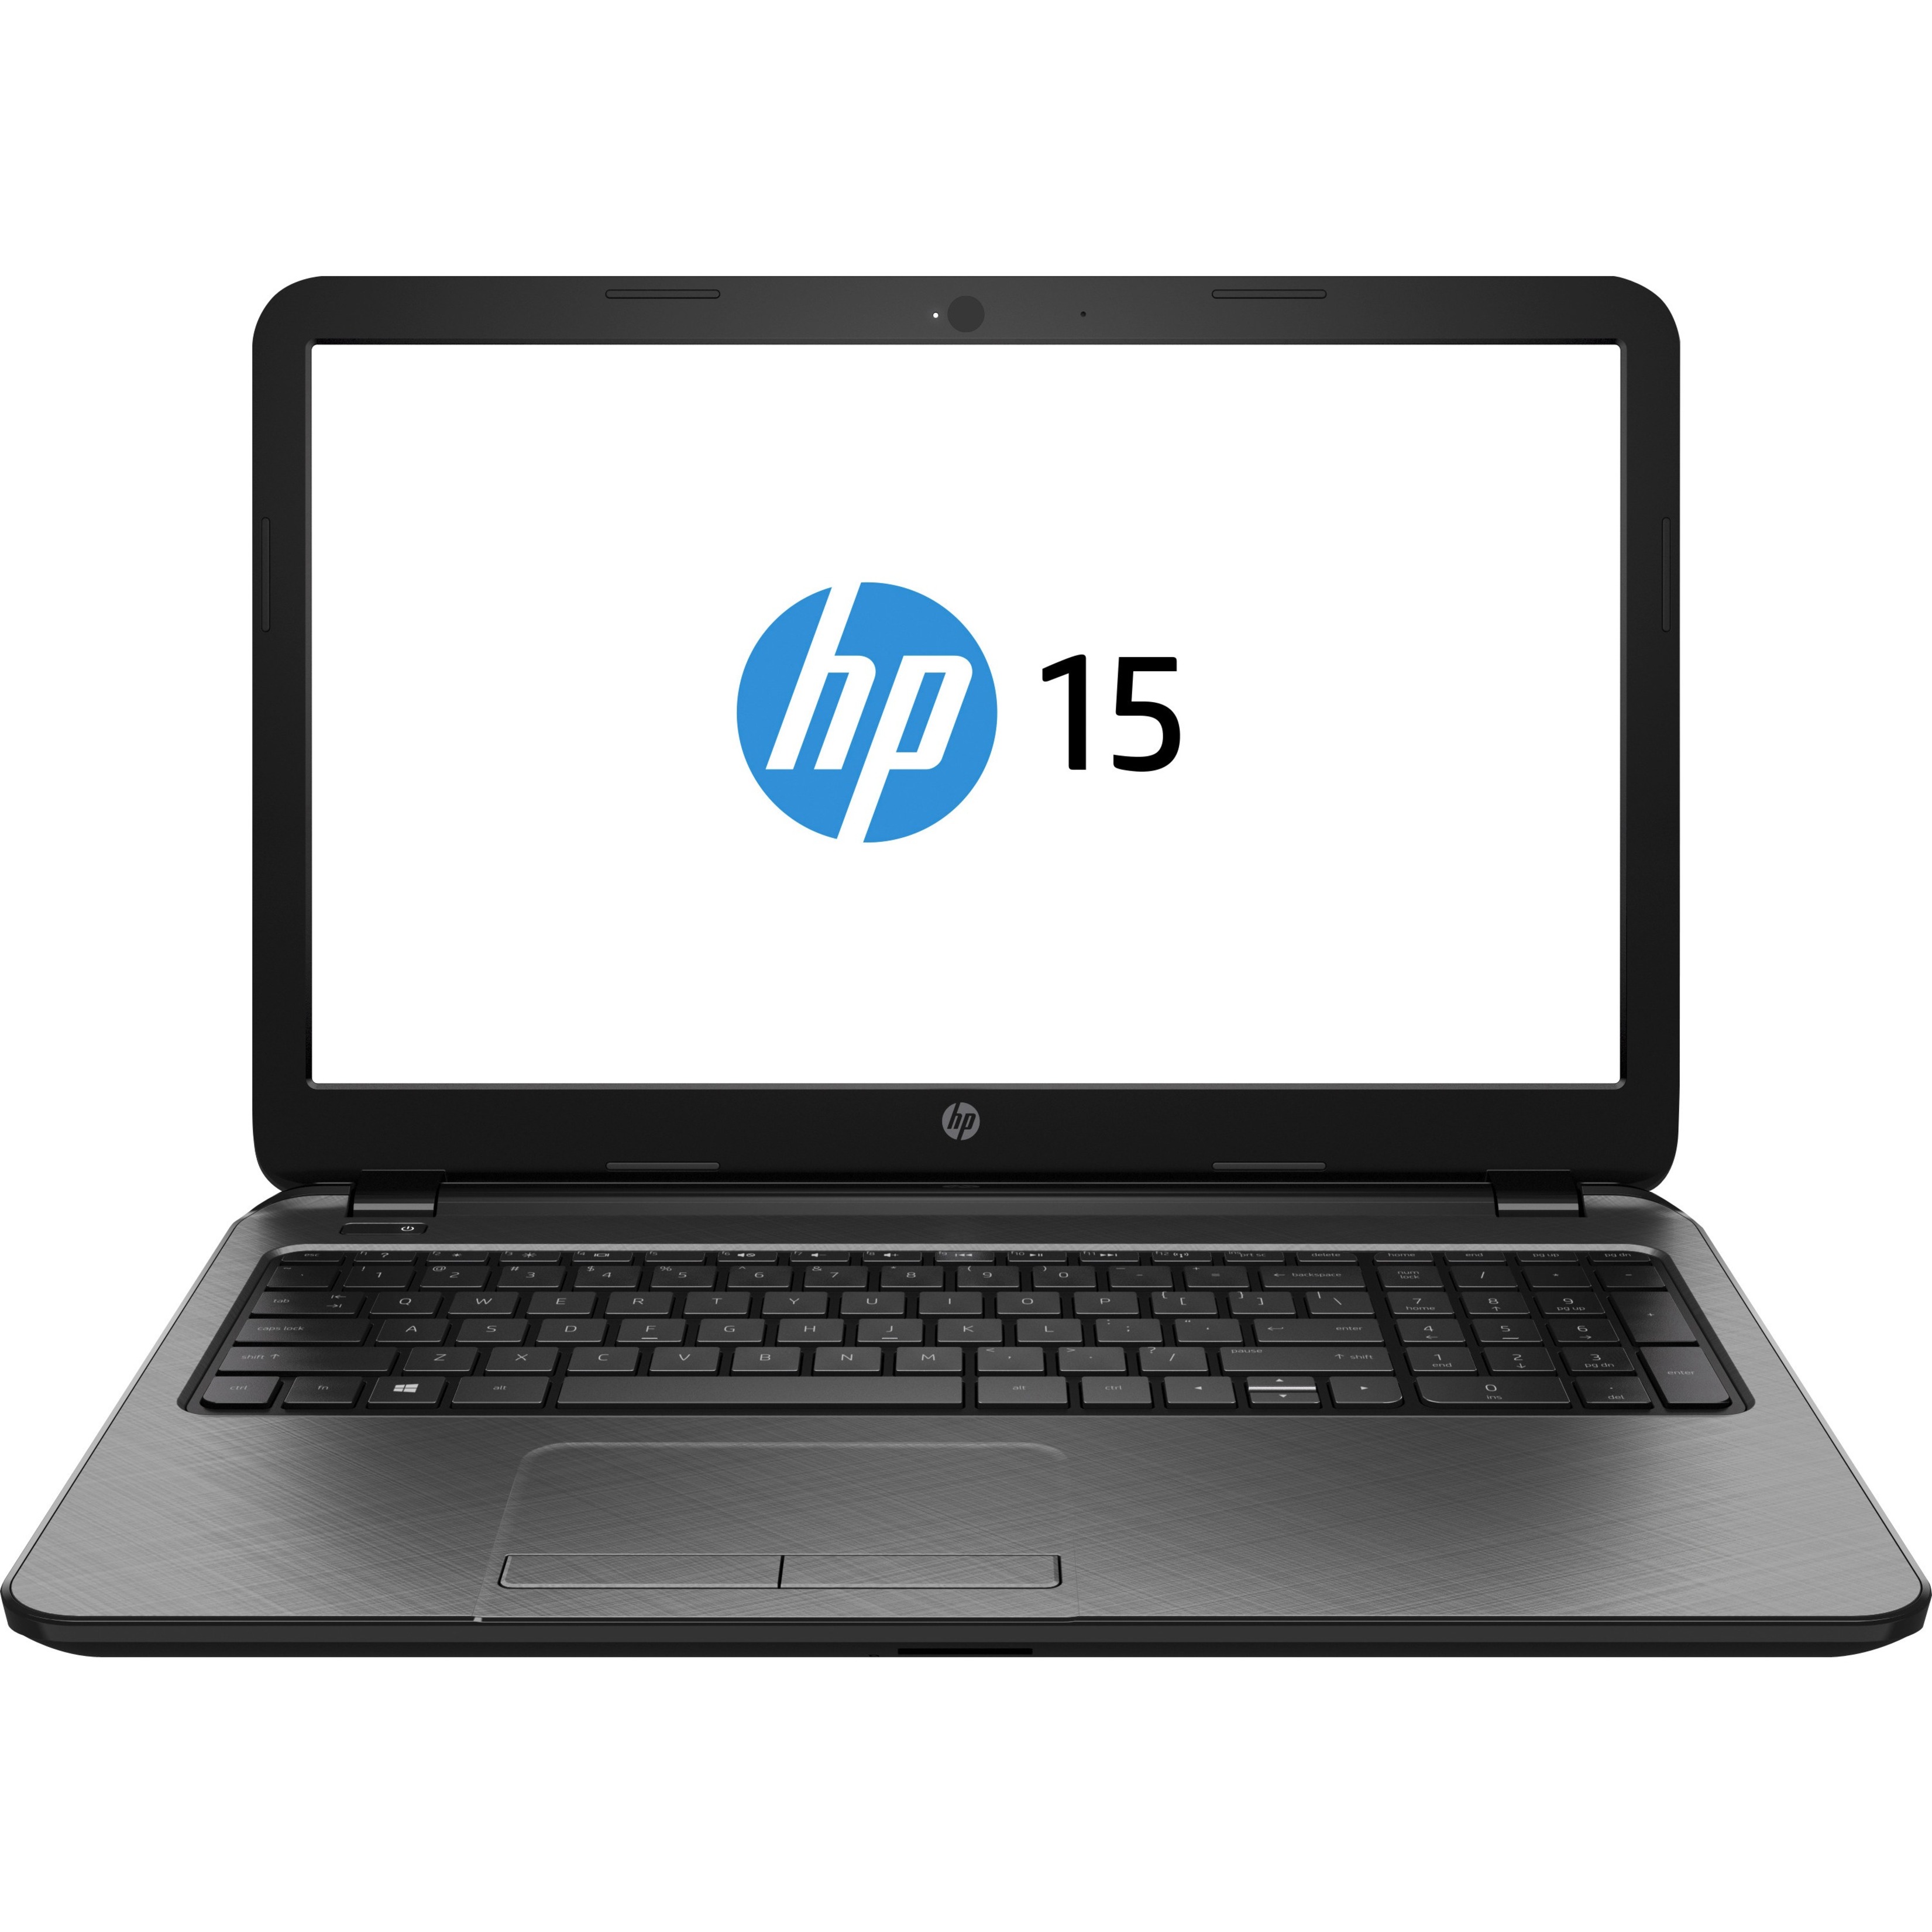 Restored HP TouchSmart 15.6" Touchscreen Laptop, AMD A-Series A8-6410, 4GB RAM, 750GB HD, DVD Writer, Windows 8.1, Black Licorice, 15-g059wm (Refurbished) - image 1 of 7